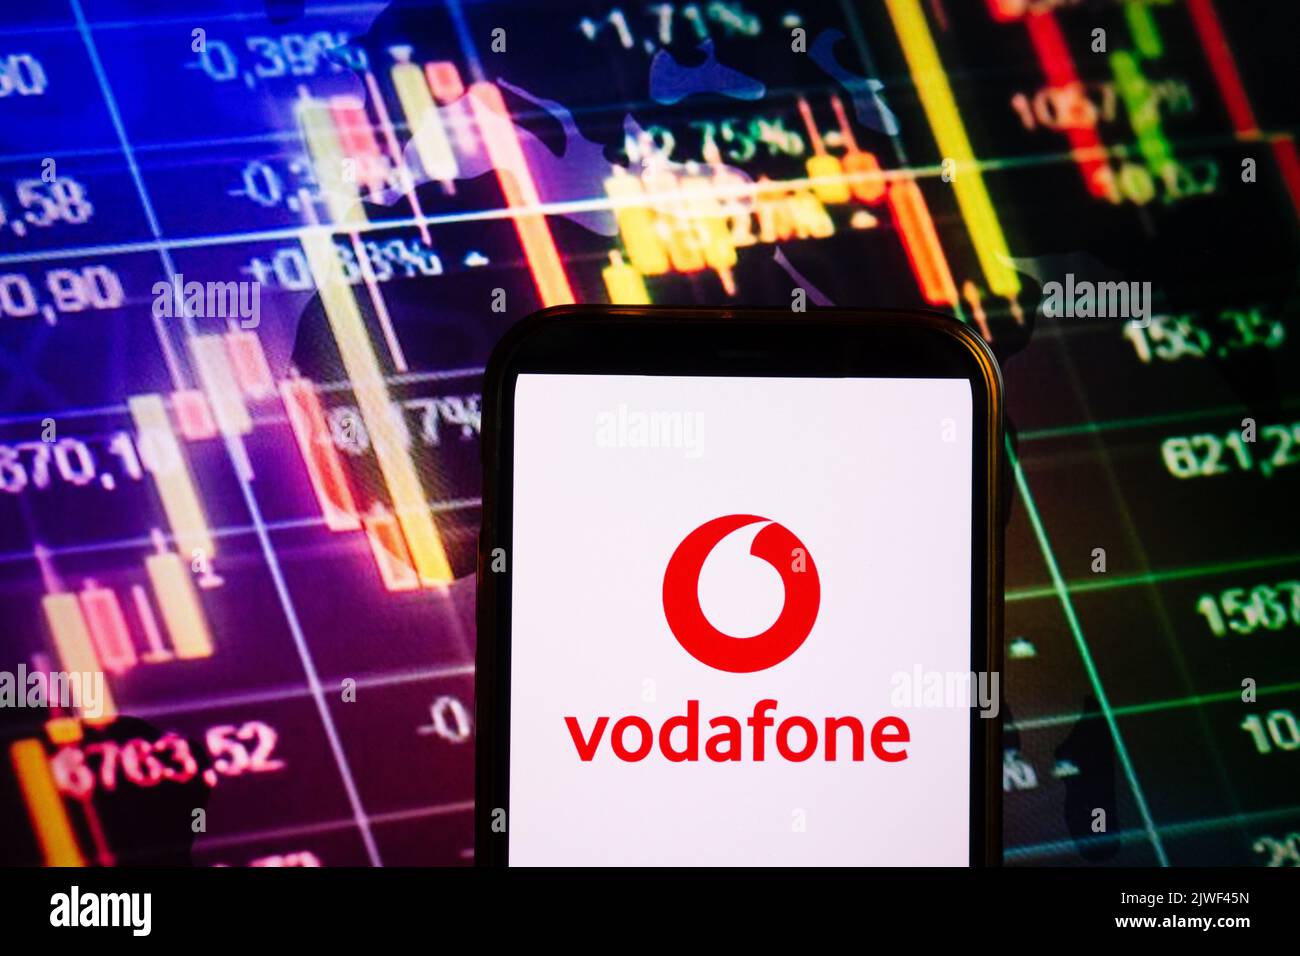 KONSKIE, POLAND - September 04, 2022: Smartphone displaying logo of Vodafone company on stock exchange diagram background Stock Photo